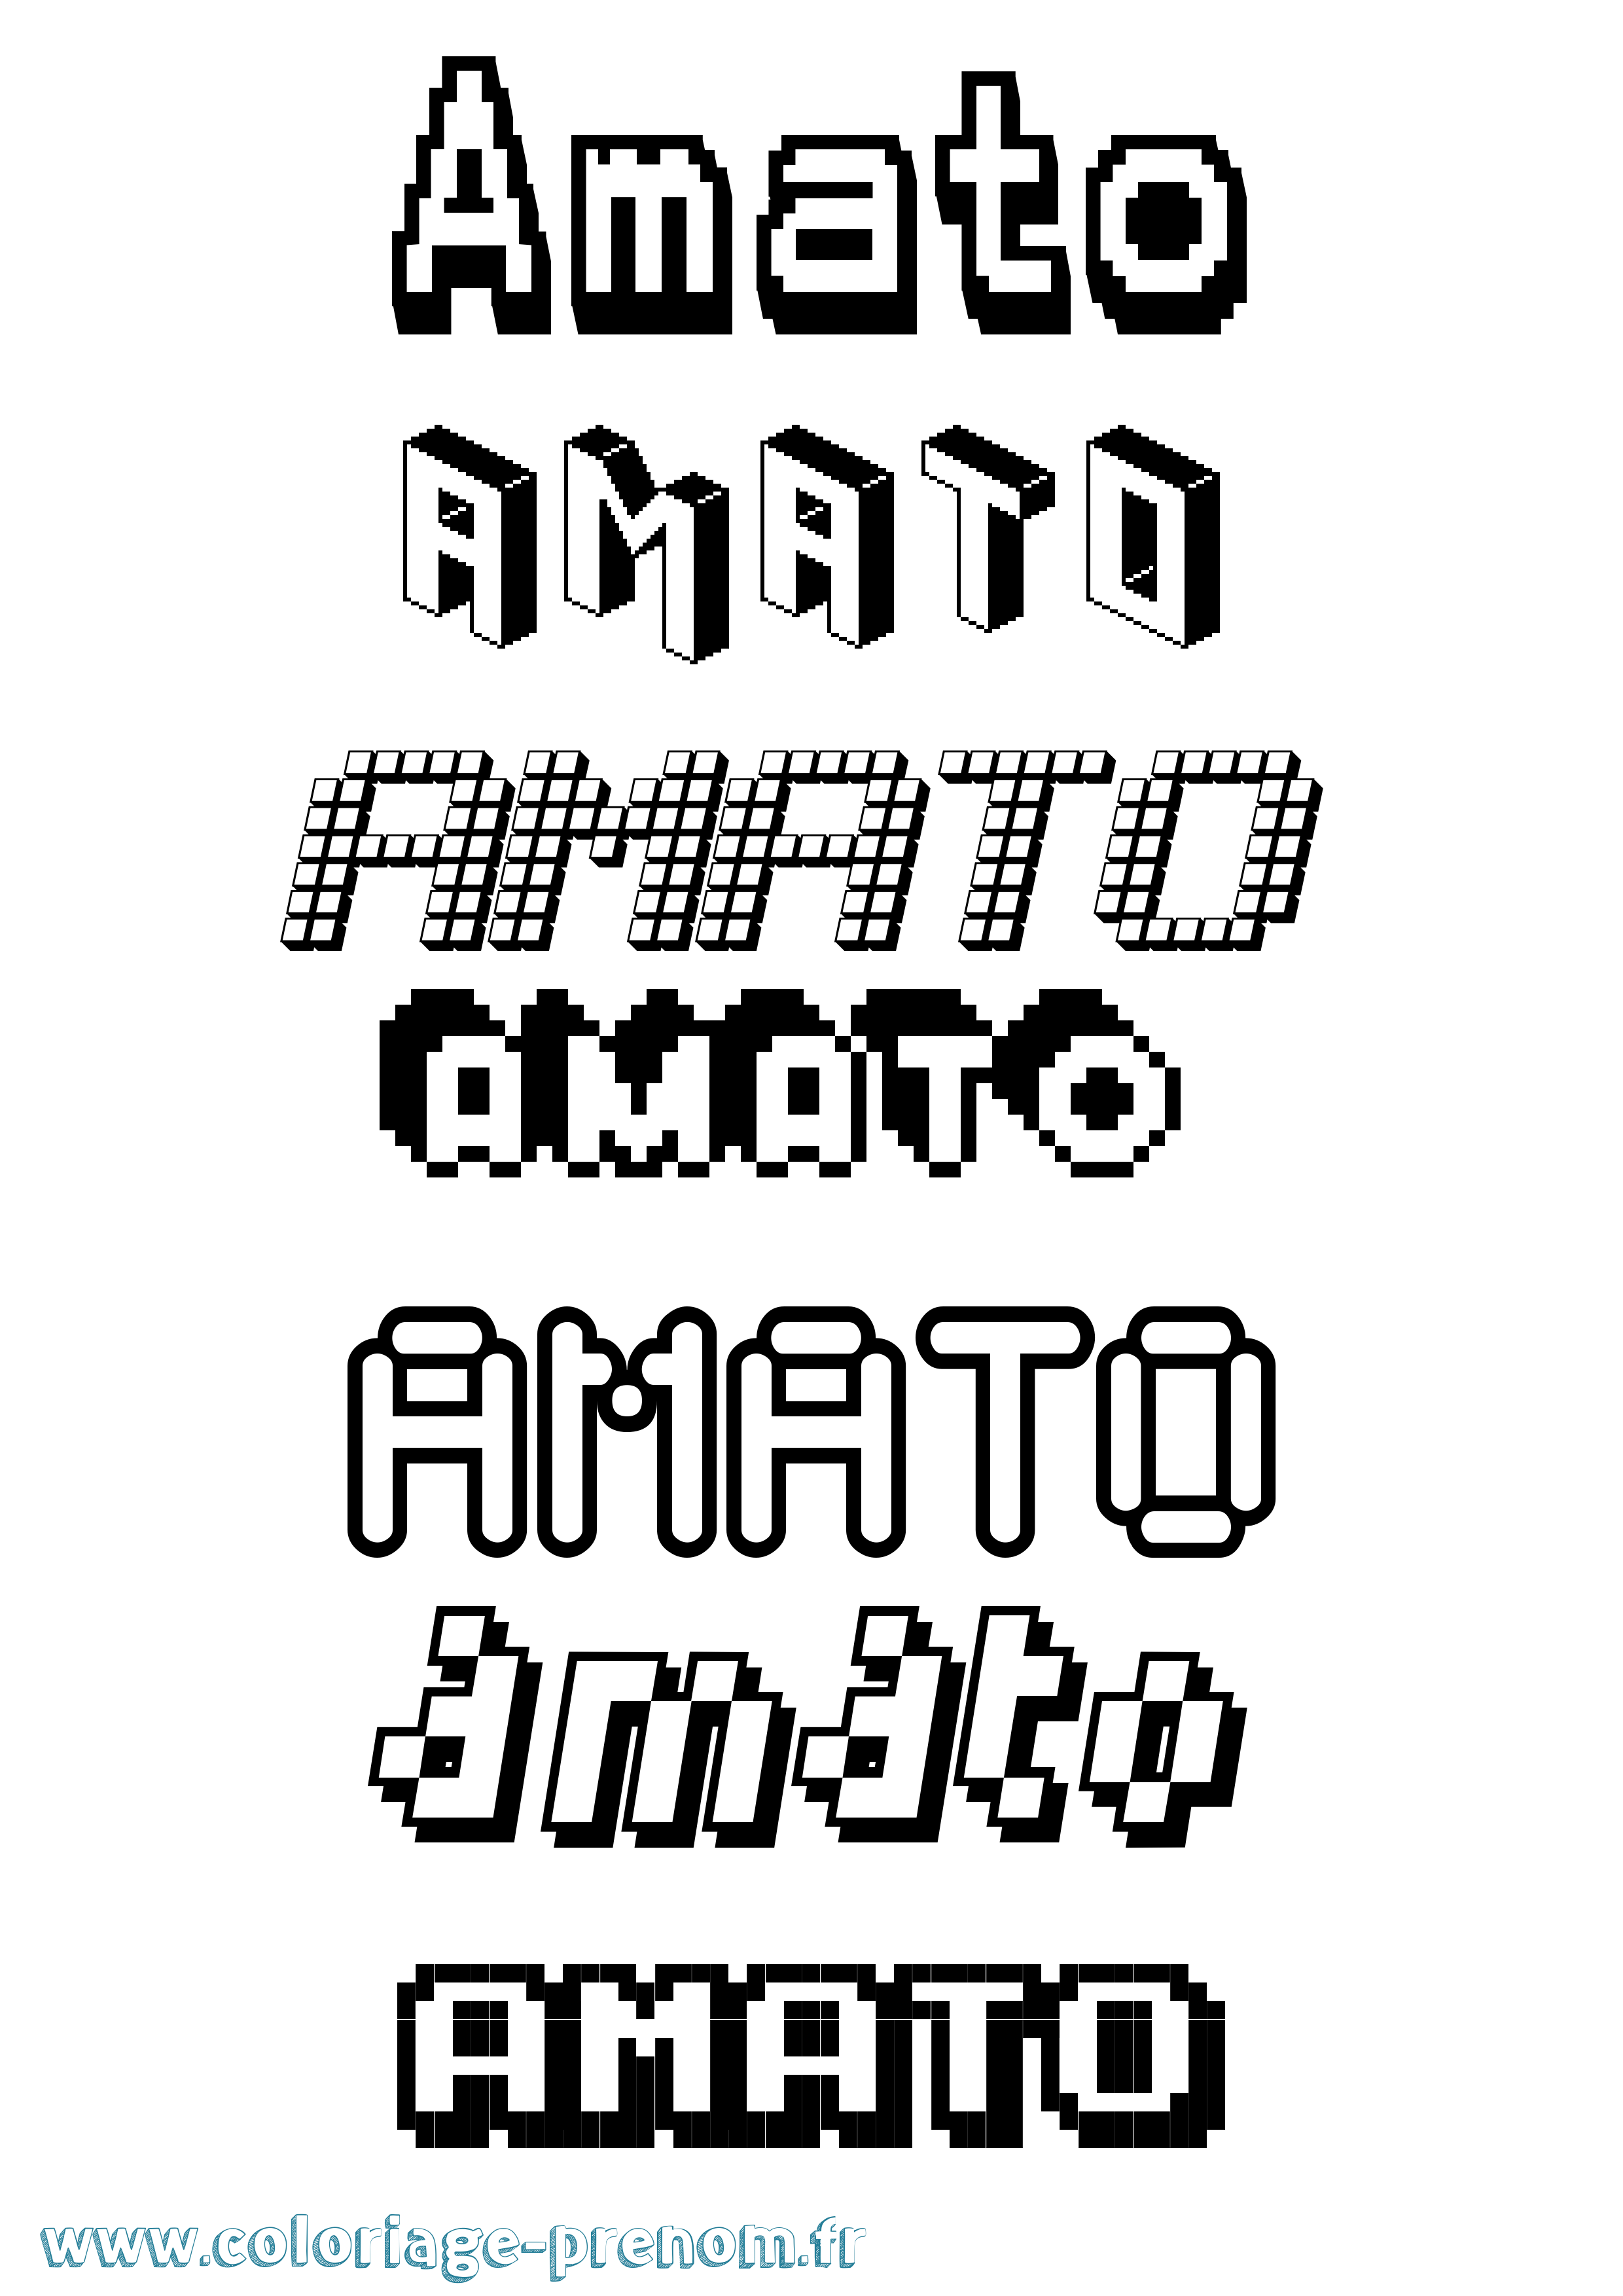 Coloriage prénom Amato Pixel